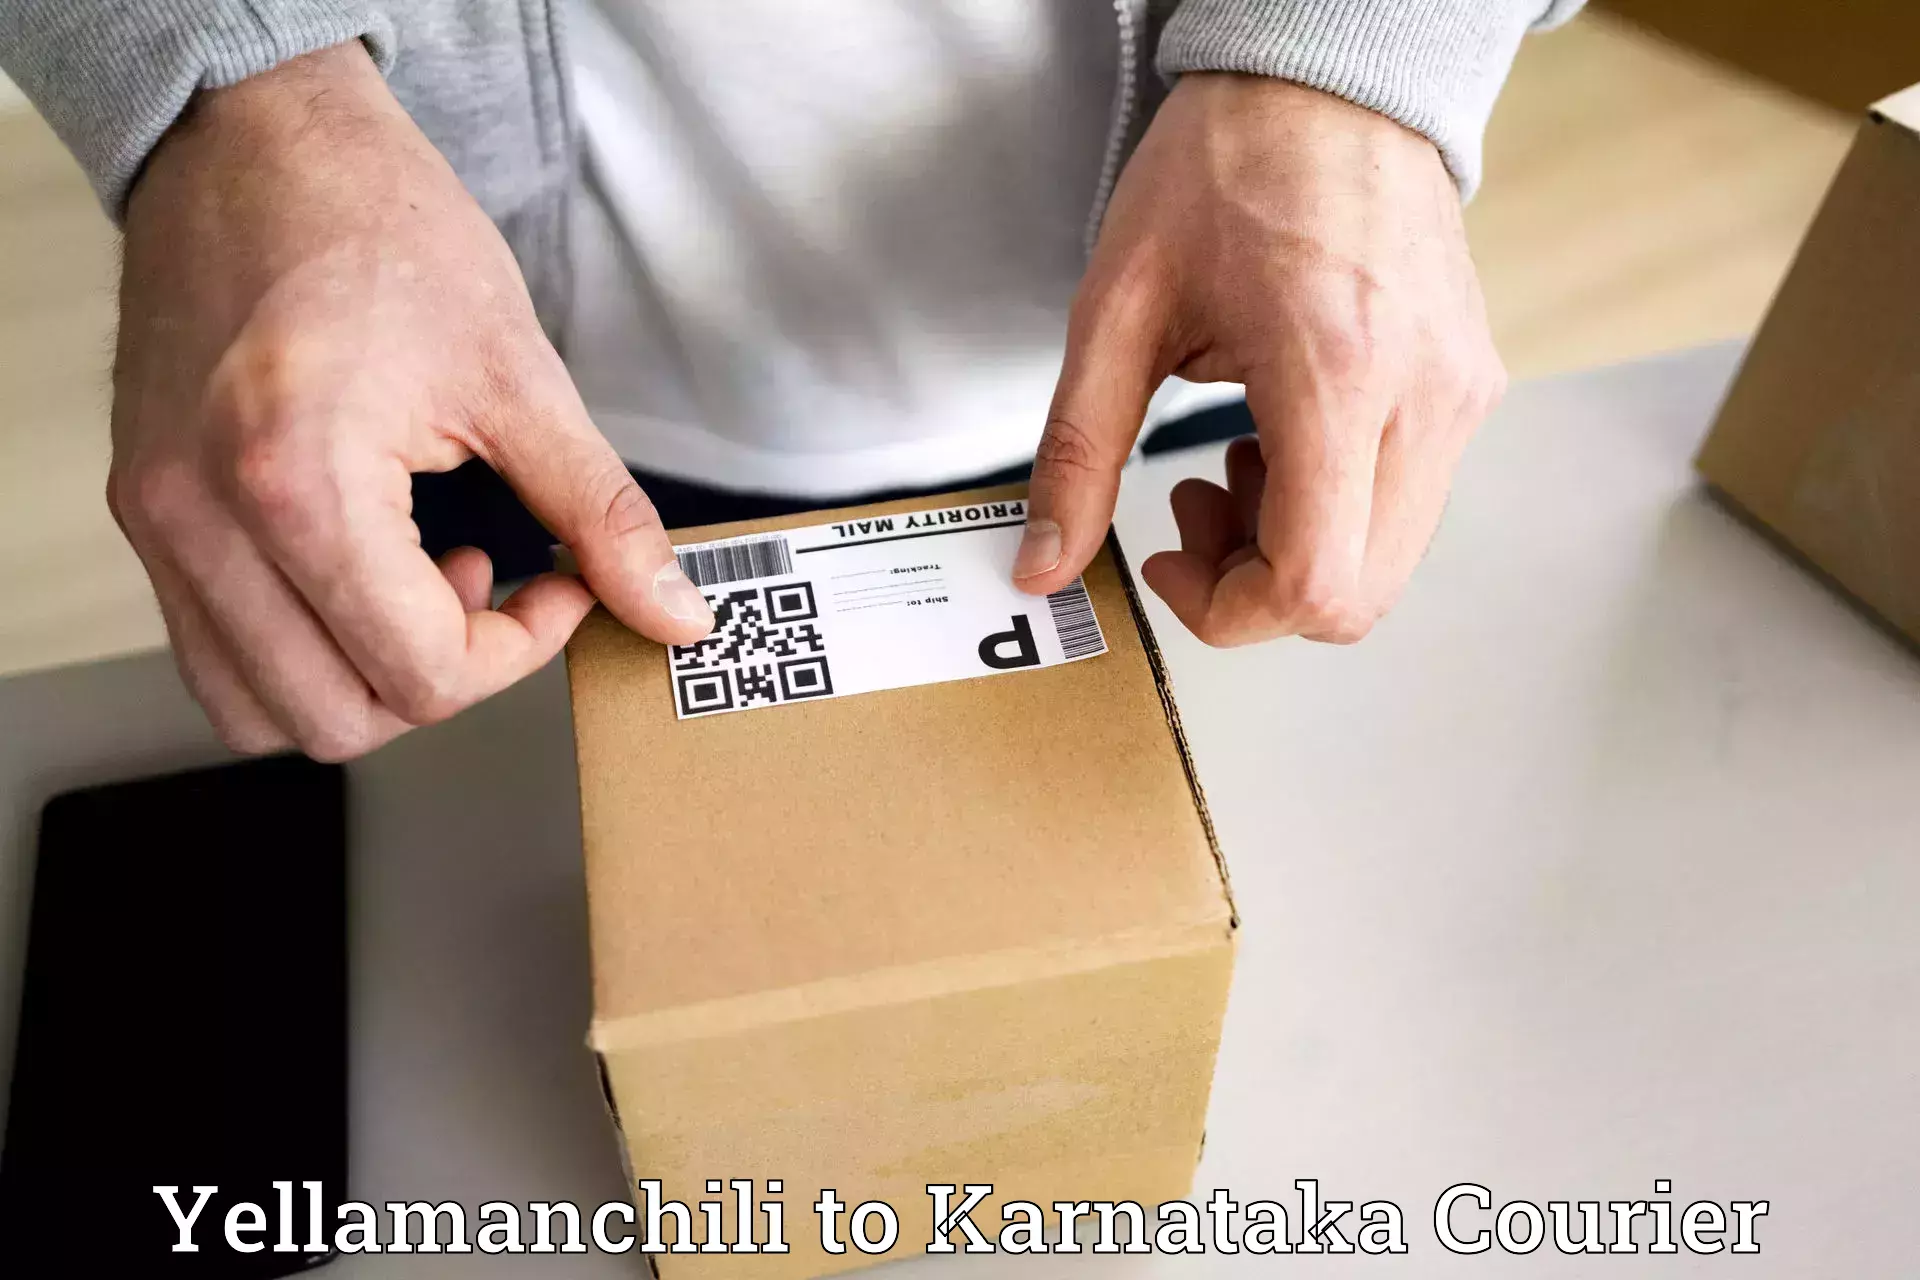 Shipping and handling Yellamanchili to Karnataka